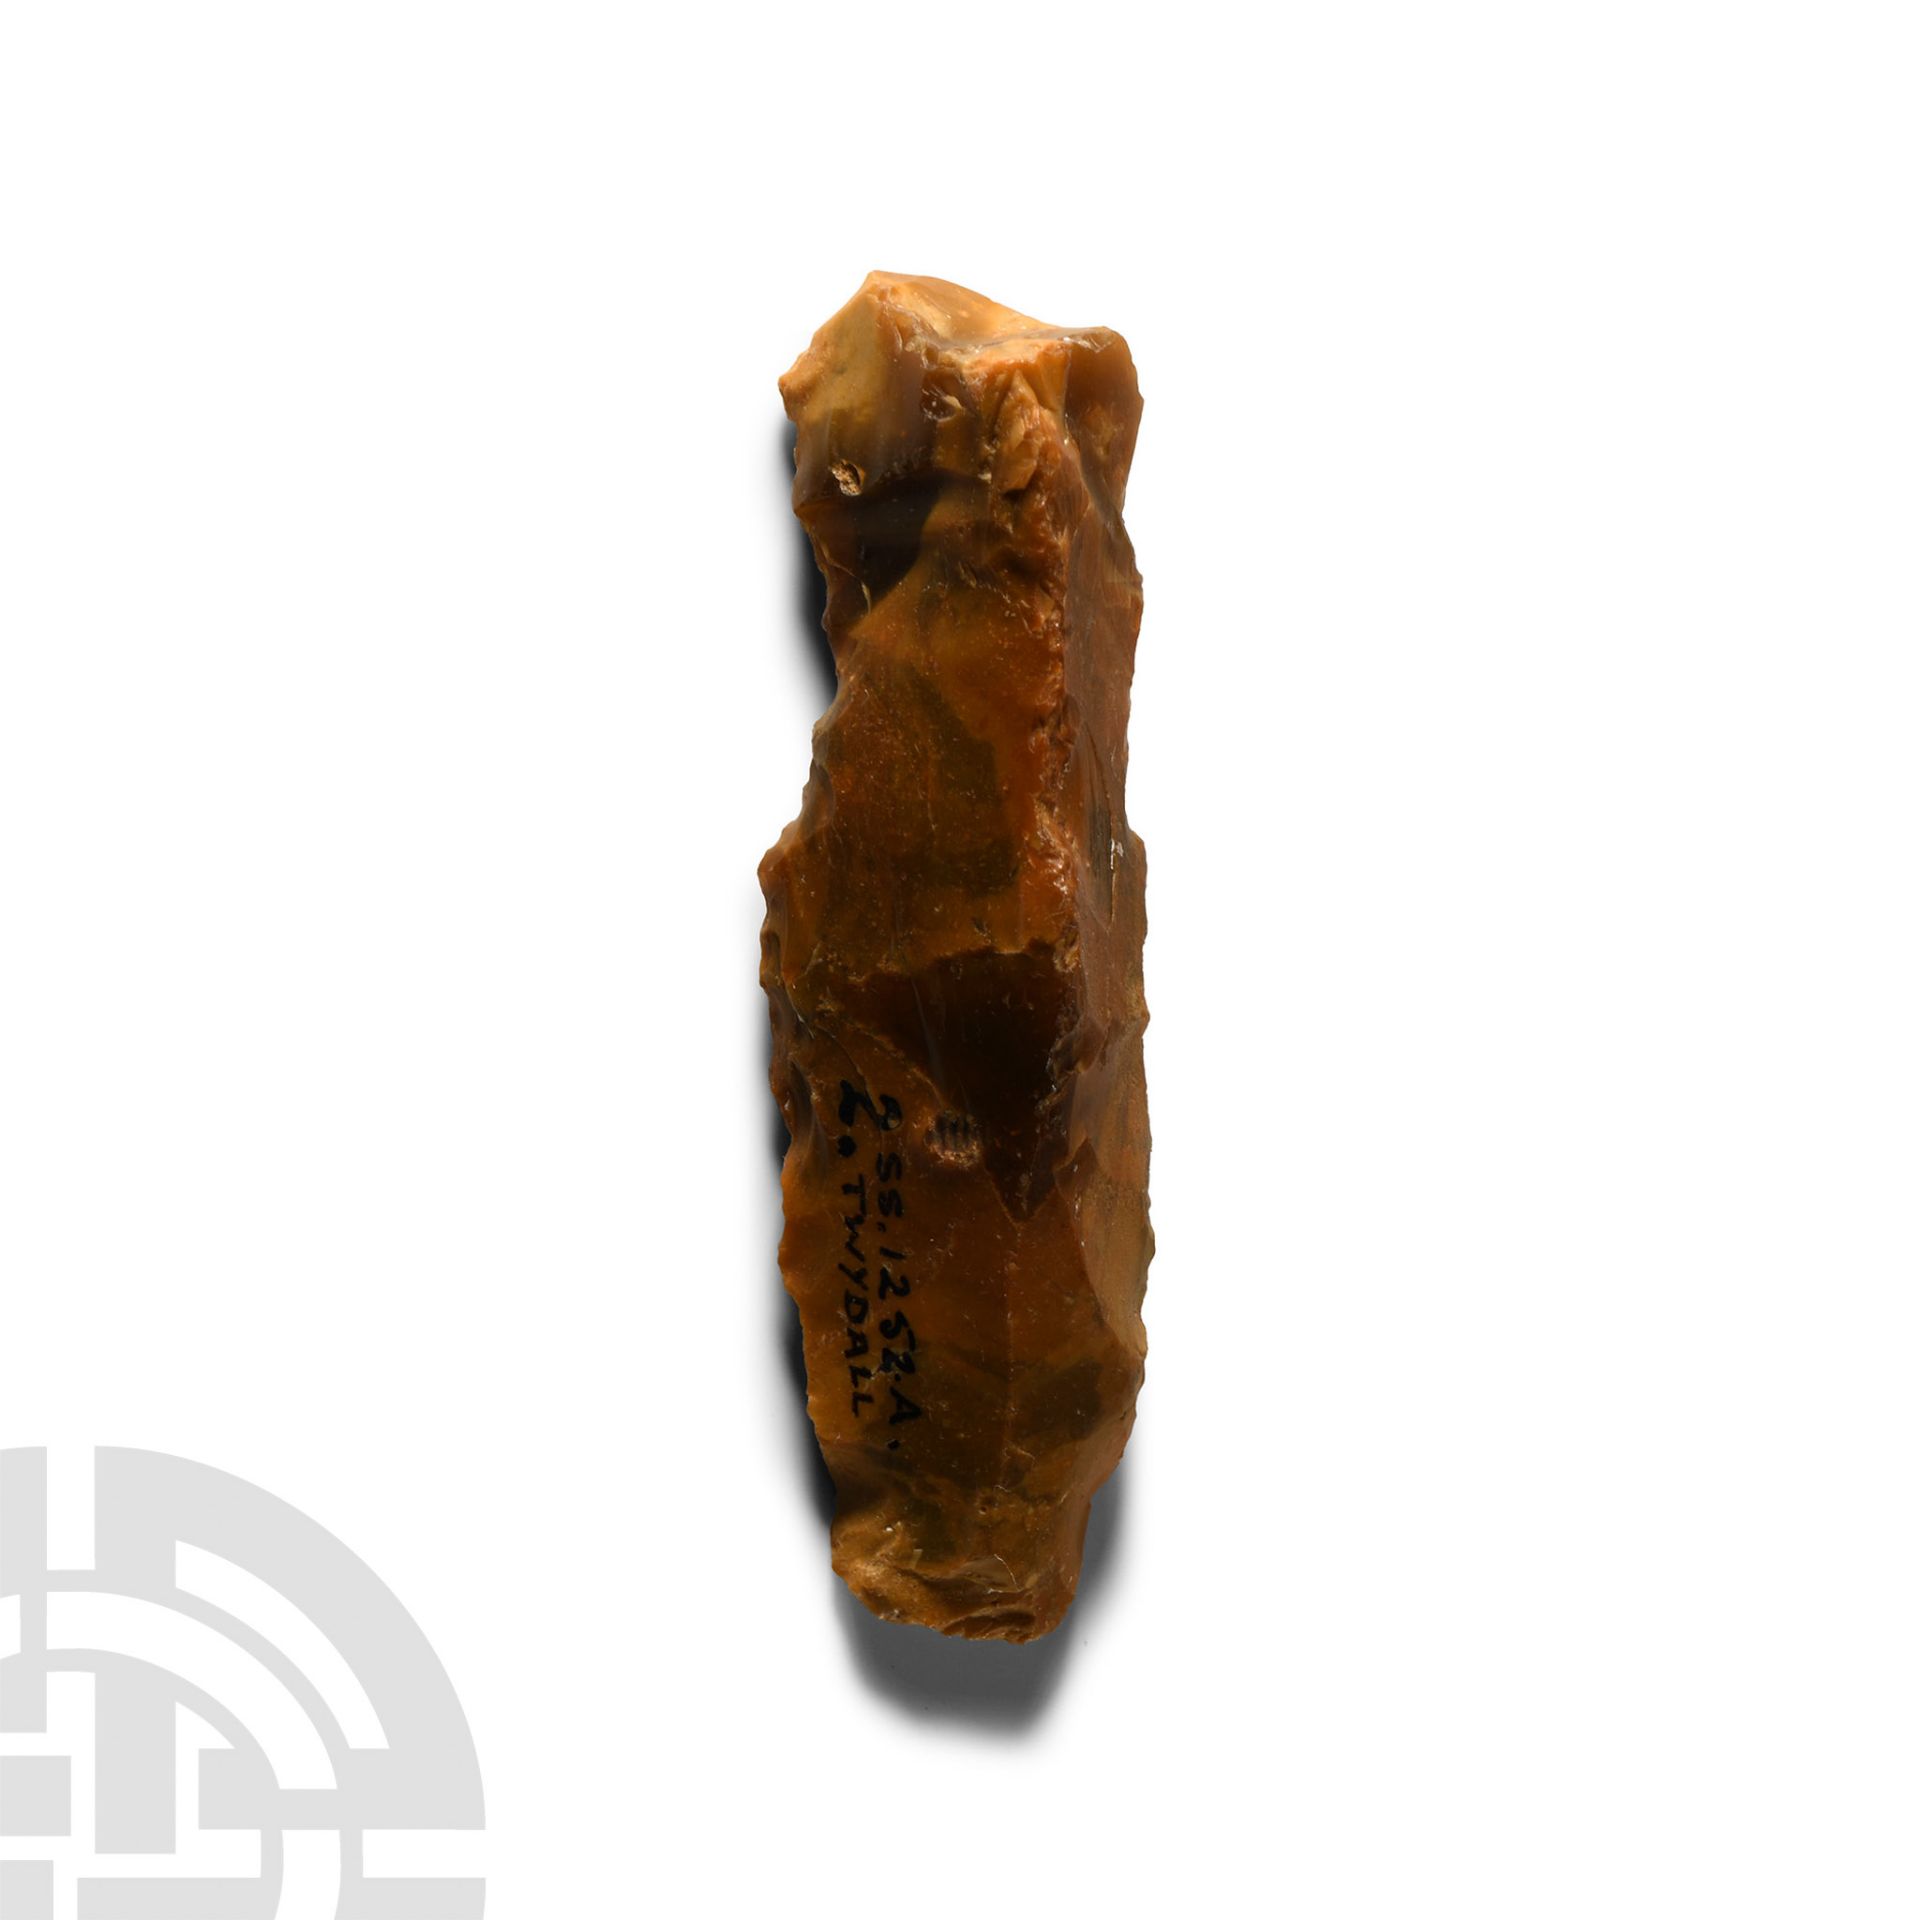 Stone Age Twydall Knapped Flint Knife